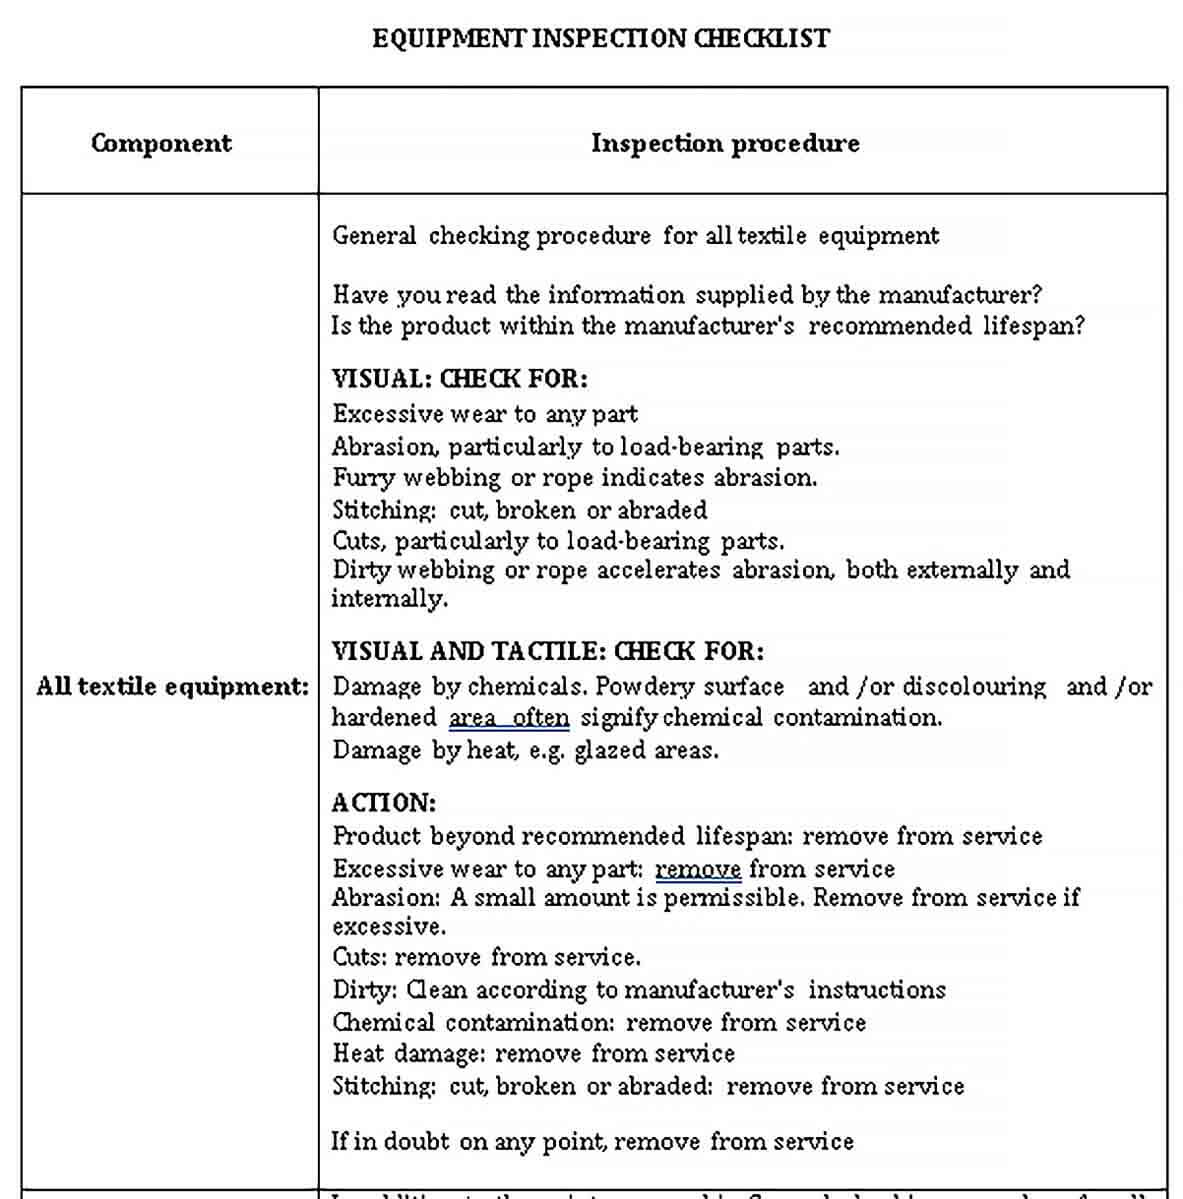 Sample Equipment Inspection Checklist Template 1